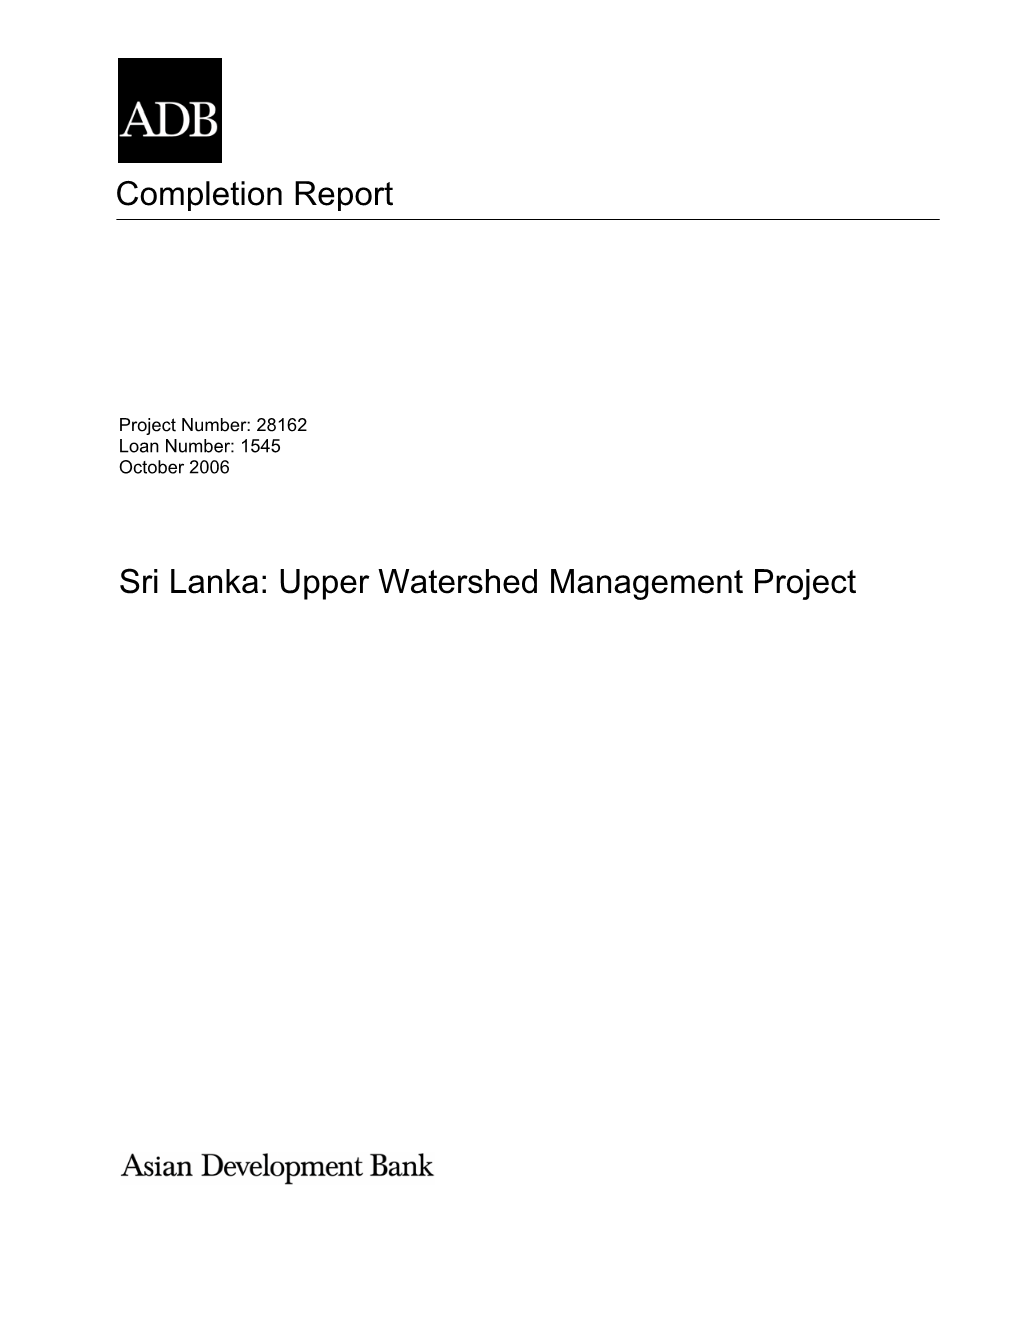 Sri Lanka: Upper Watershed Management Project